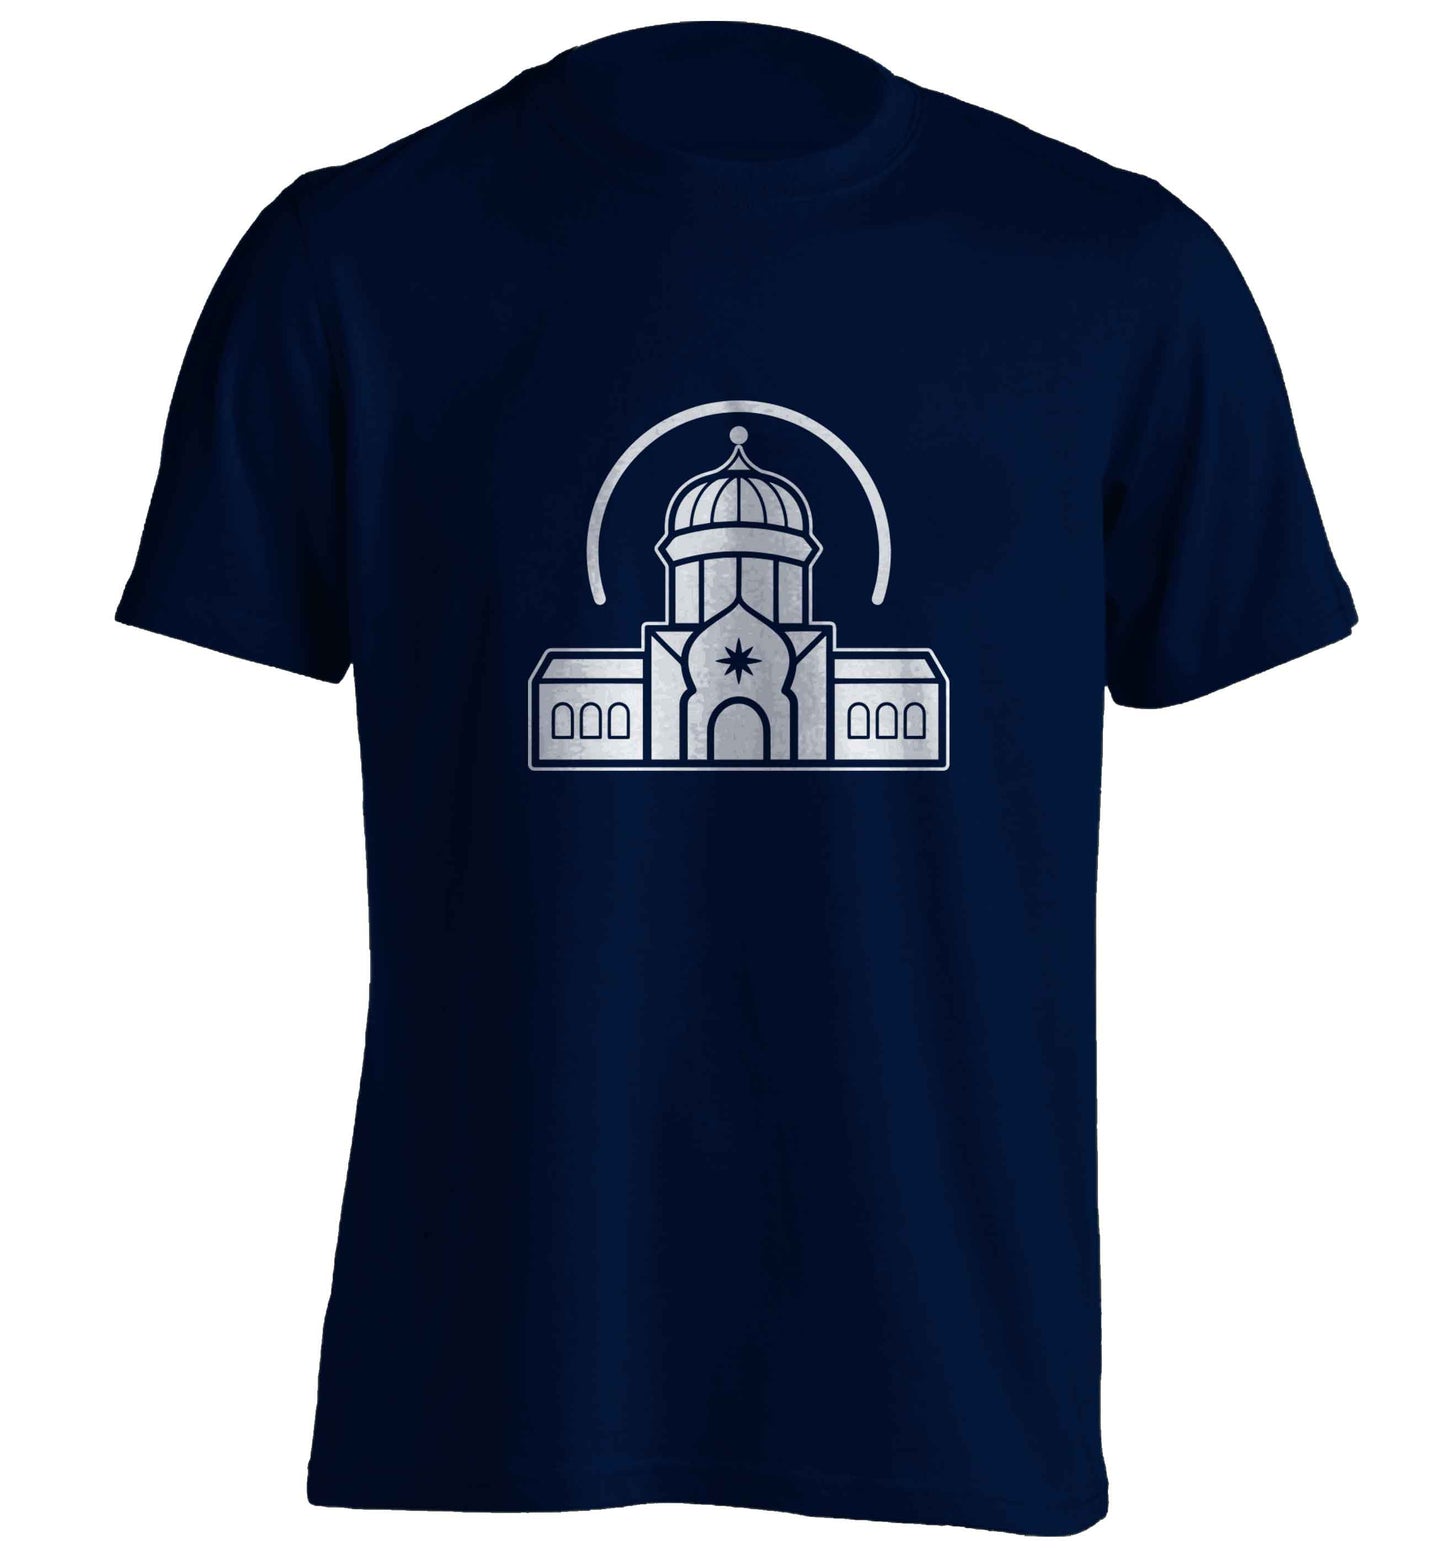 mosque masjid adults unisex navy Tshirt 2XL